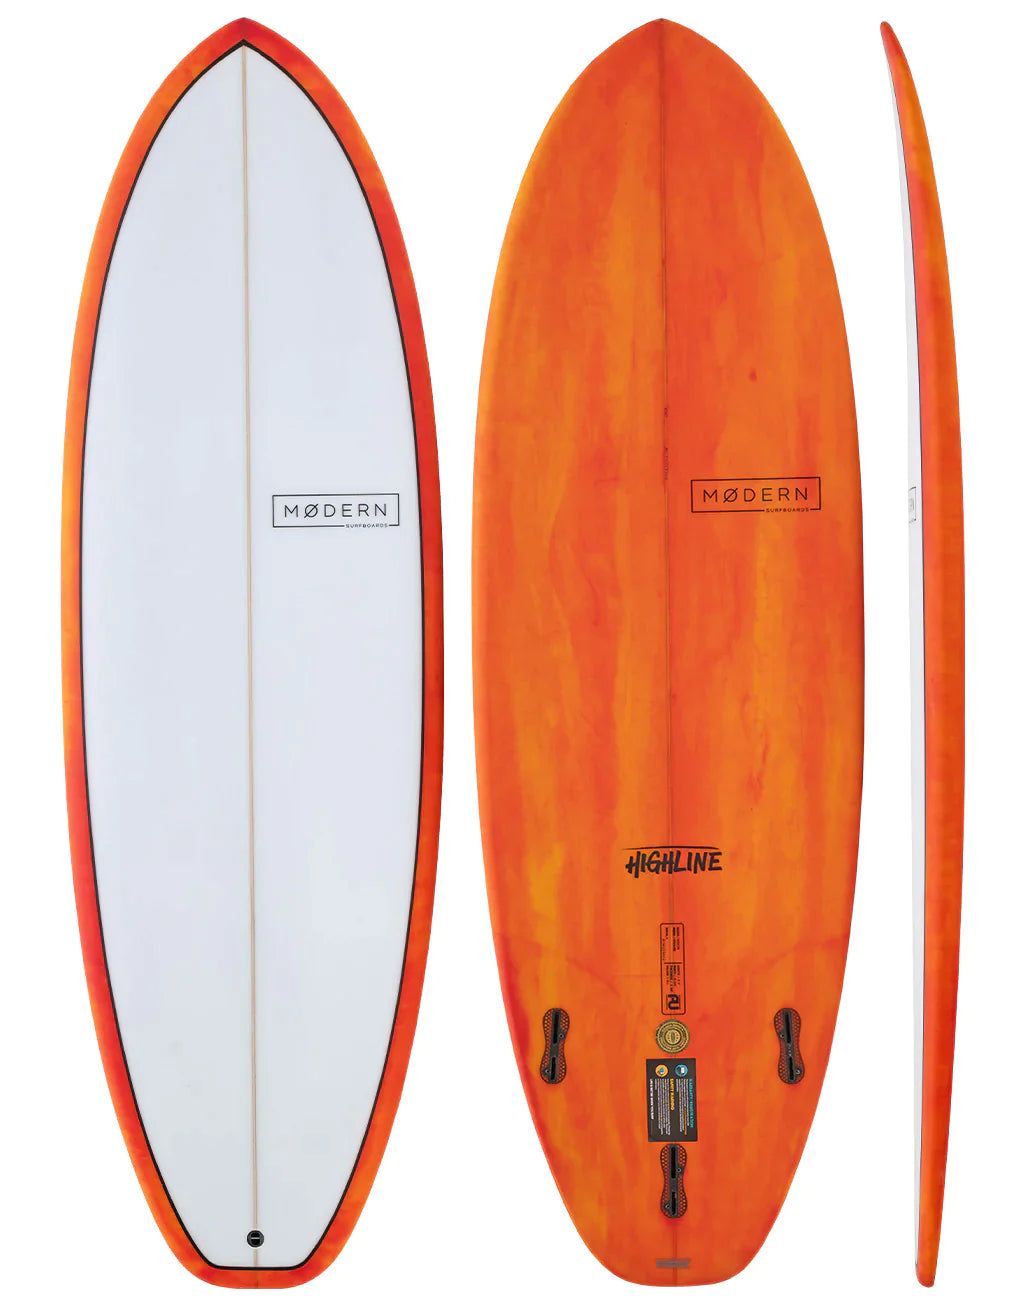 Modern Highline 6'8" Surfboard